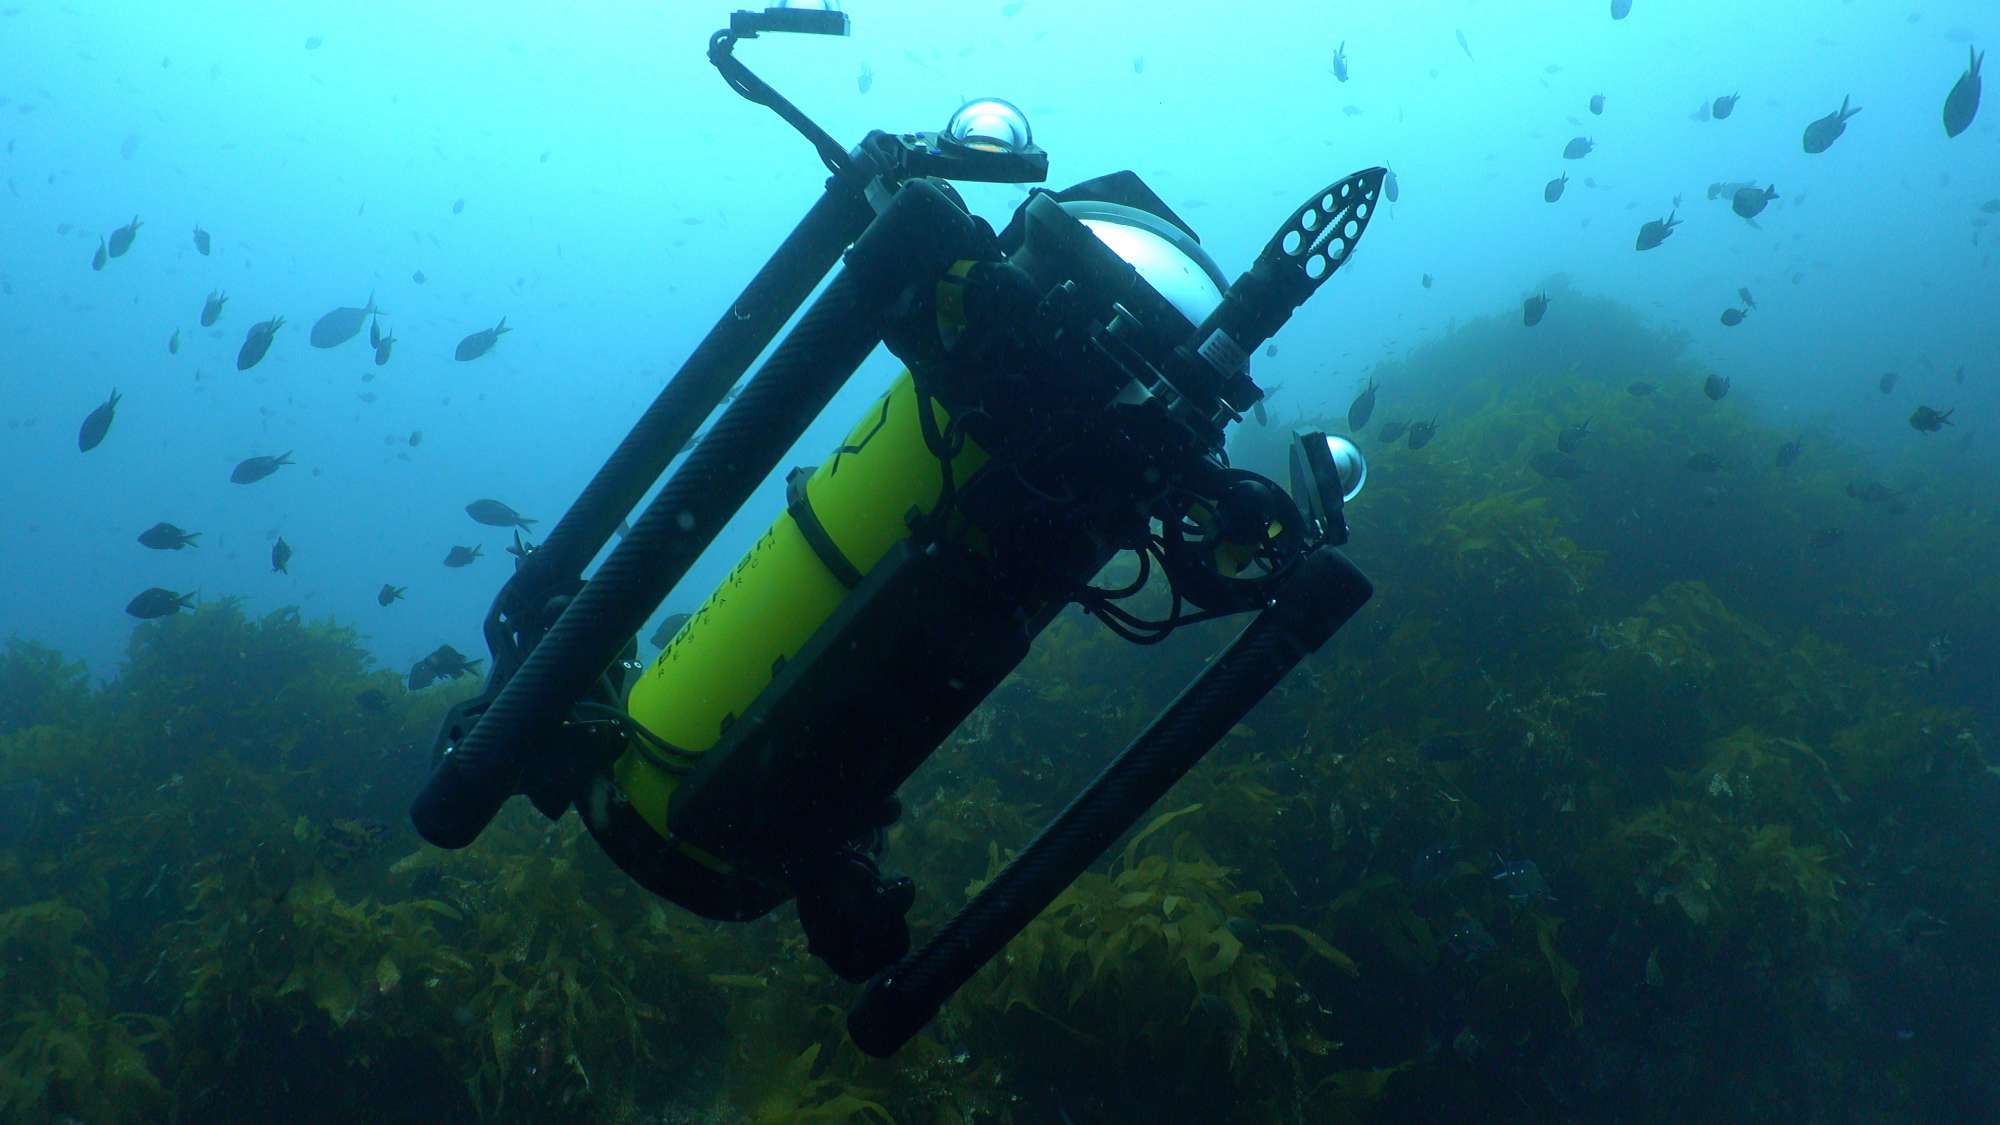 Blueprint Lab Single Action ROV grabber Mounted on Boxfish Luna Underwater Drone